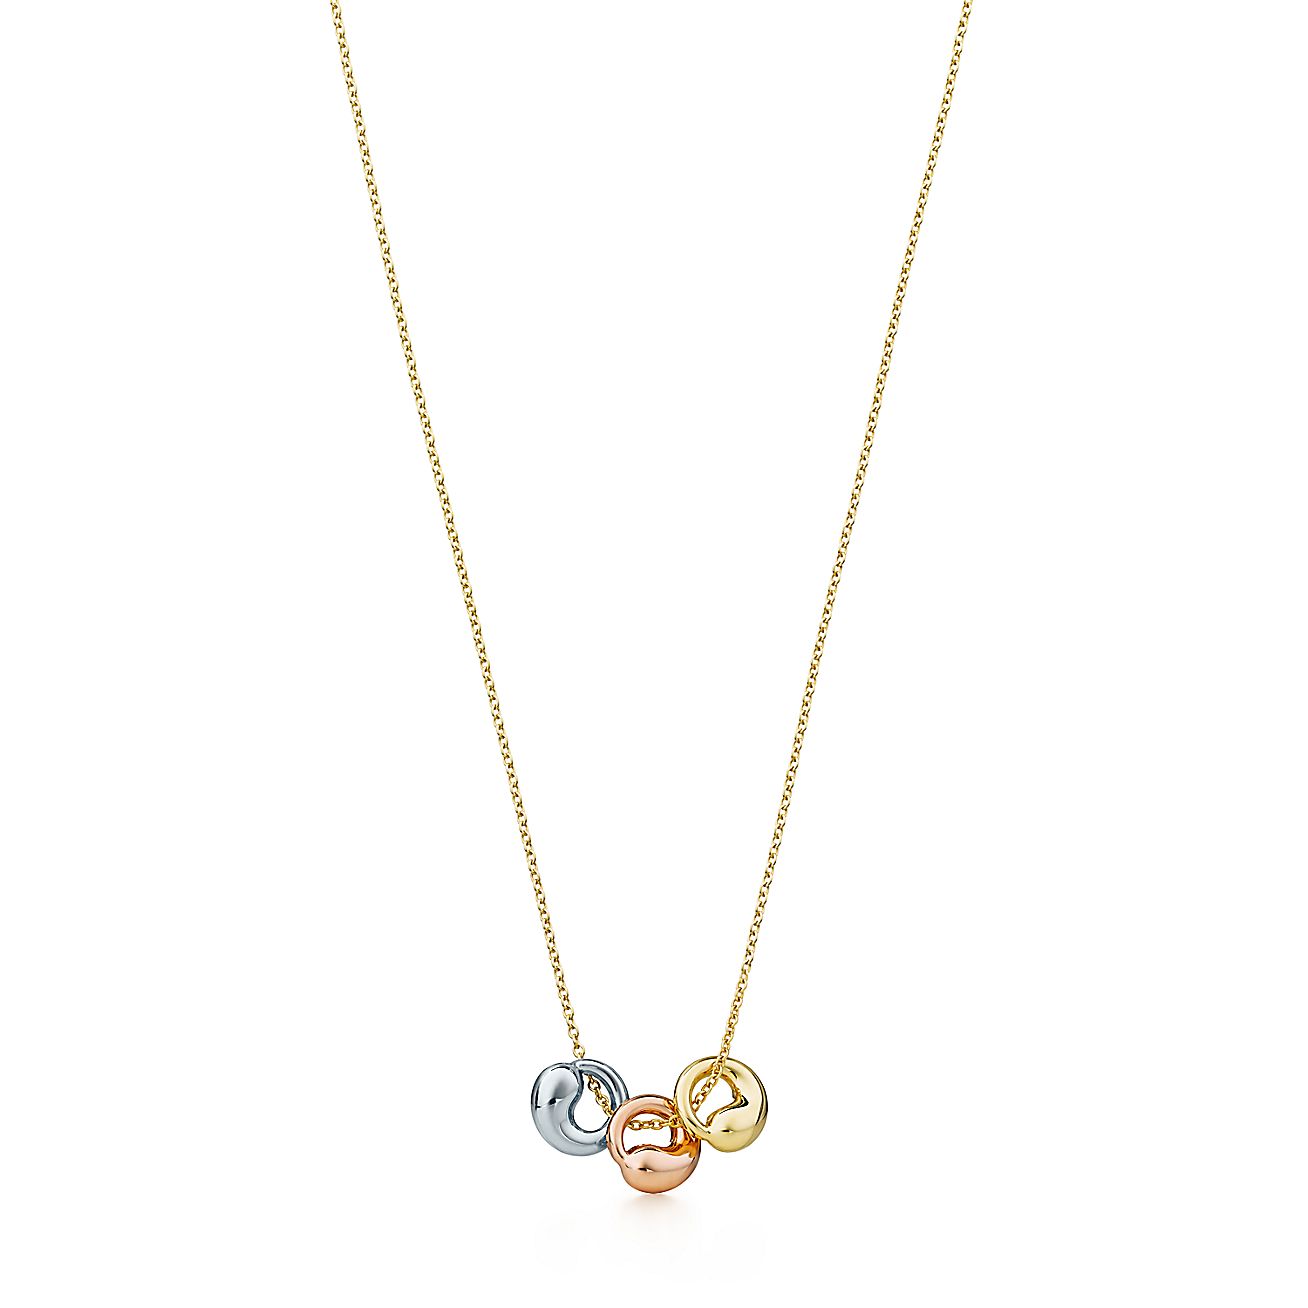 Elsa Peretti® Eternal Circle pendant in 18k yellow, rose and white gold